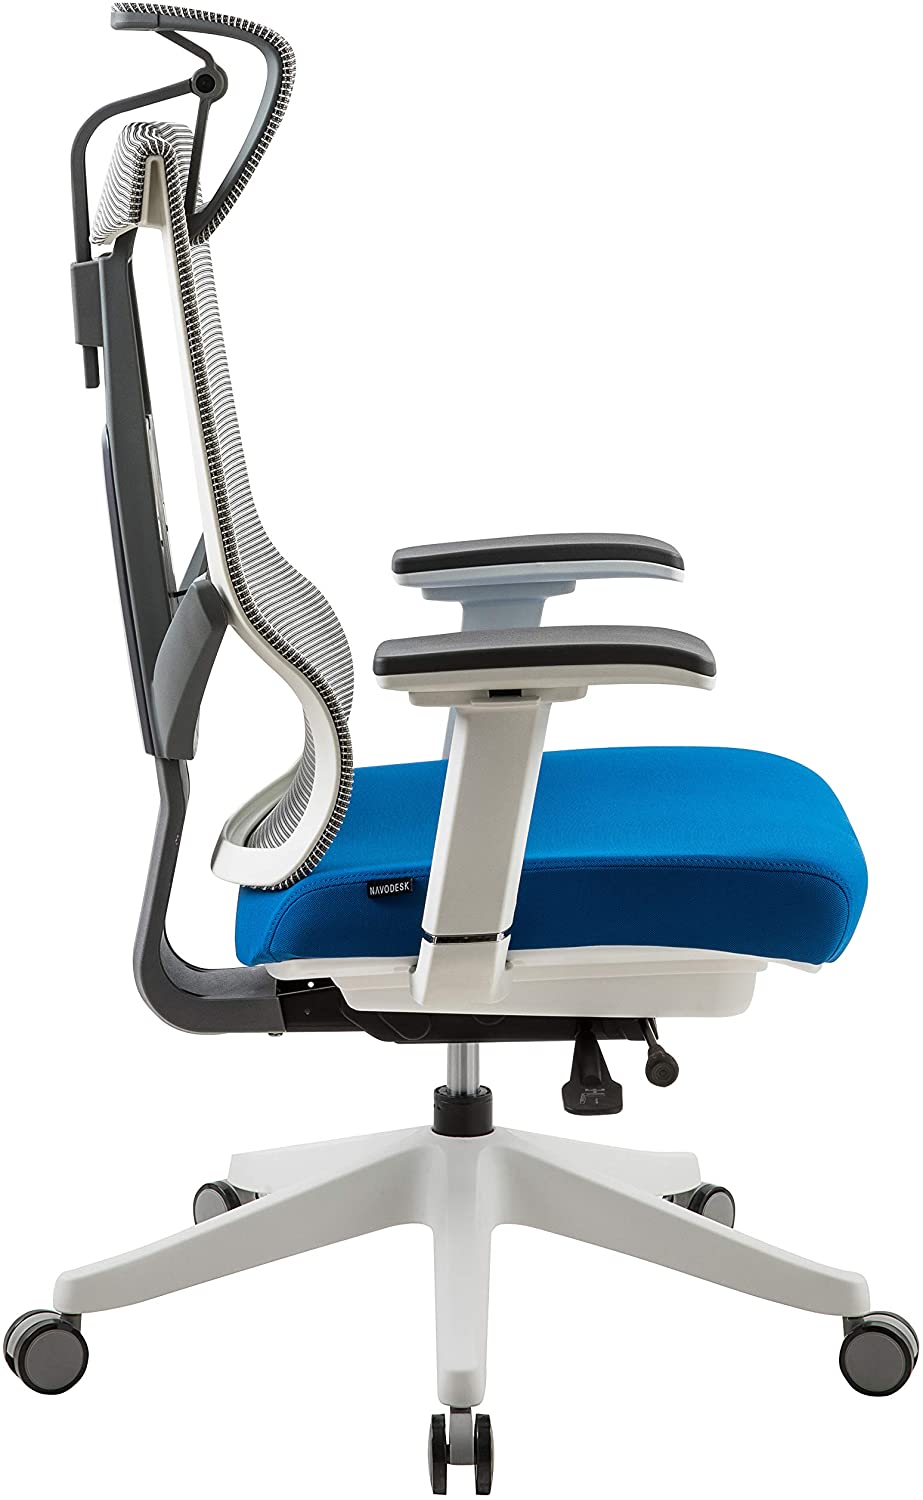 Premium Quality Aero Fabric Chairs by Navodesk